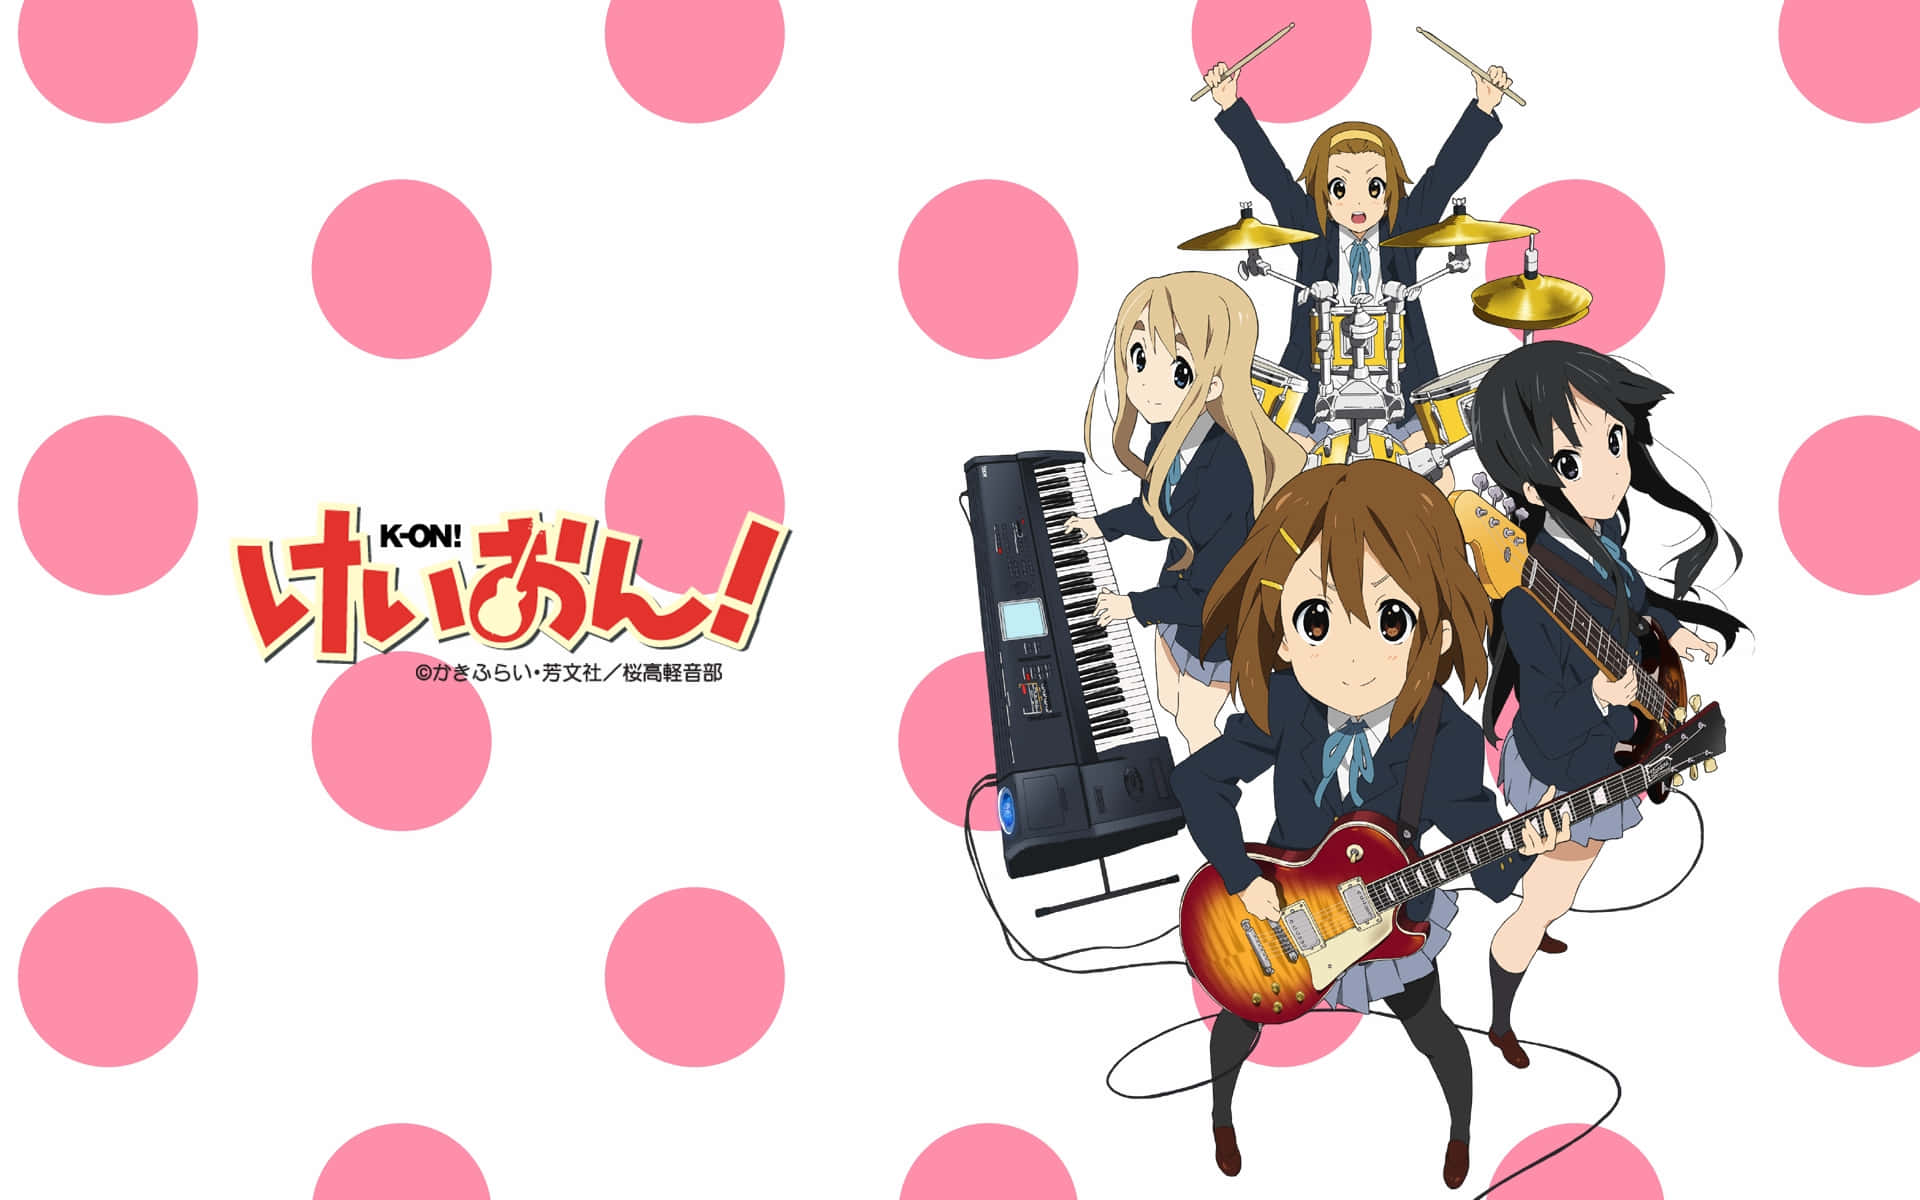 Meninasde Anime Com Guitarras E Polka Dots